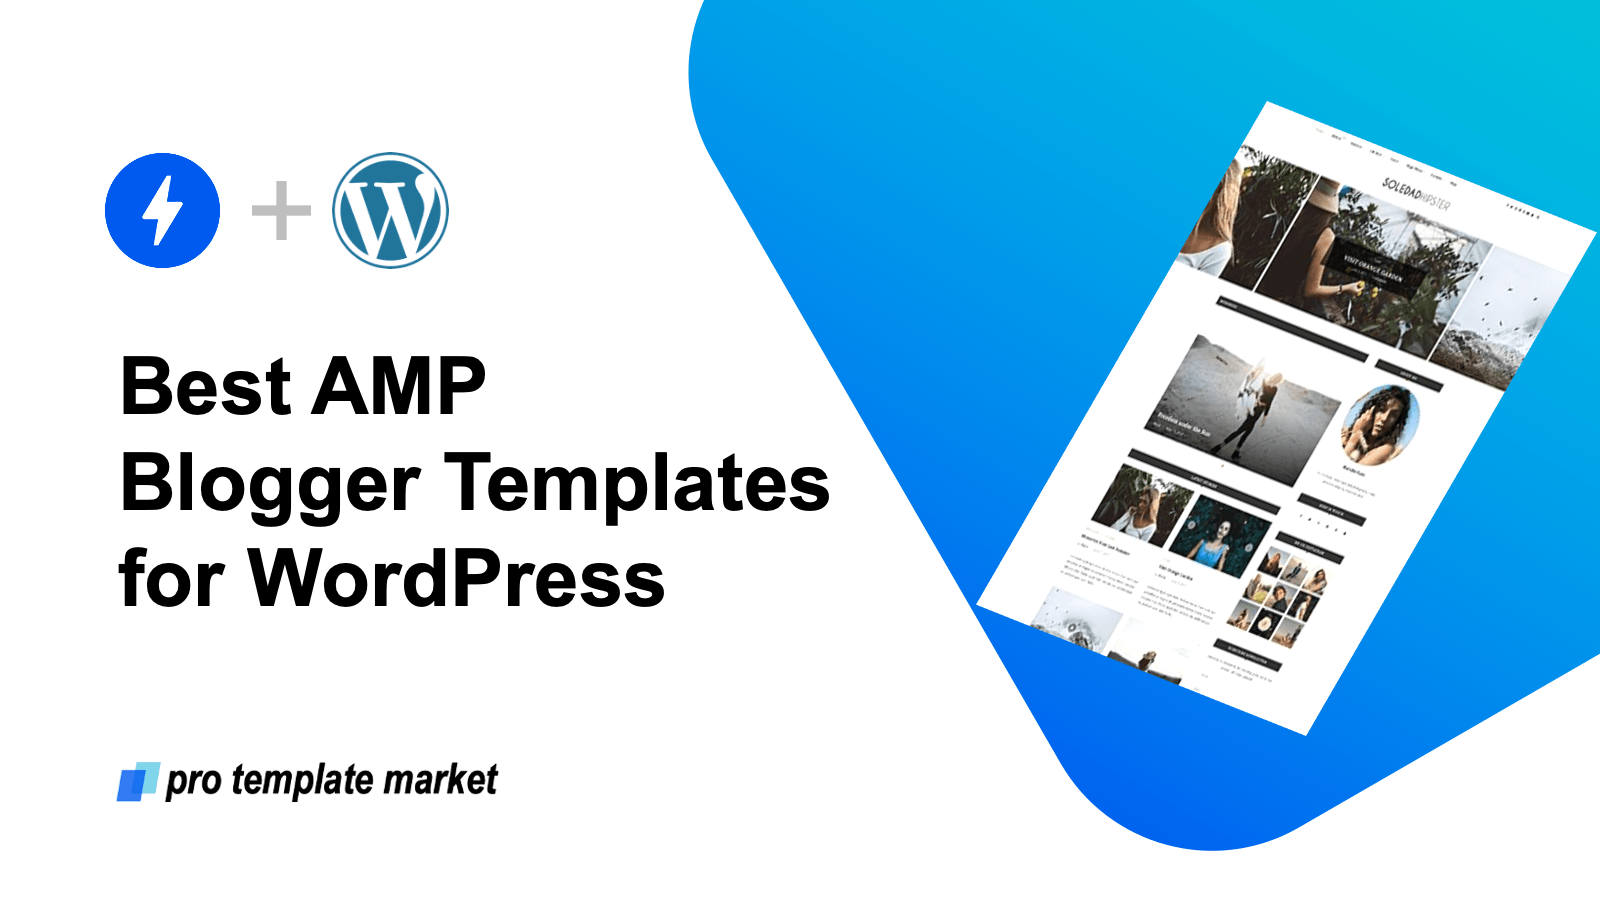 10 Best AMP Blogger Templates for WordPress in 2021 (Based on Testing)